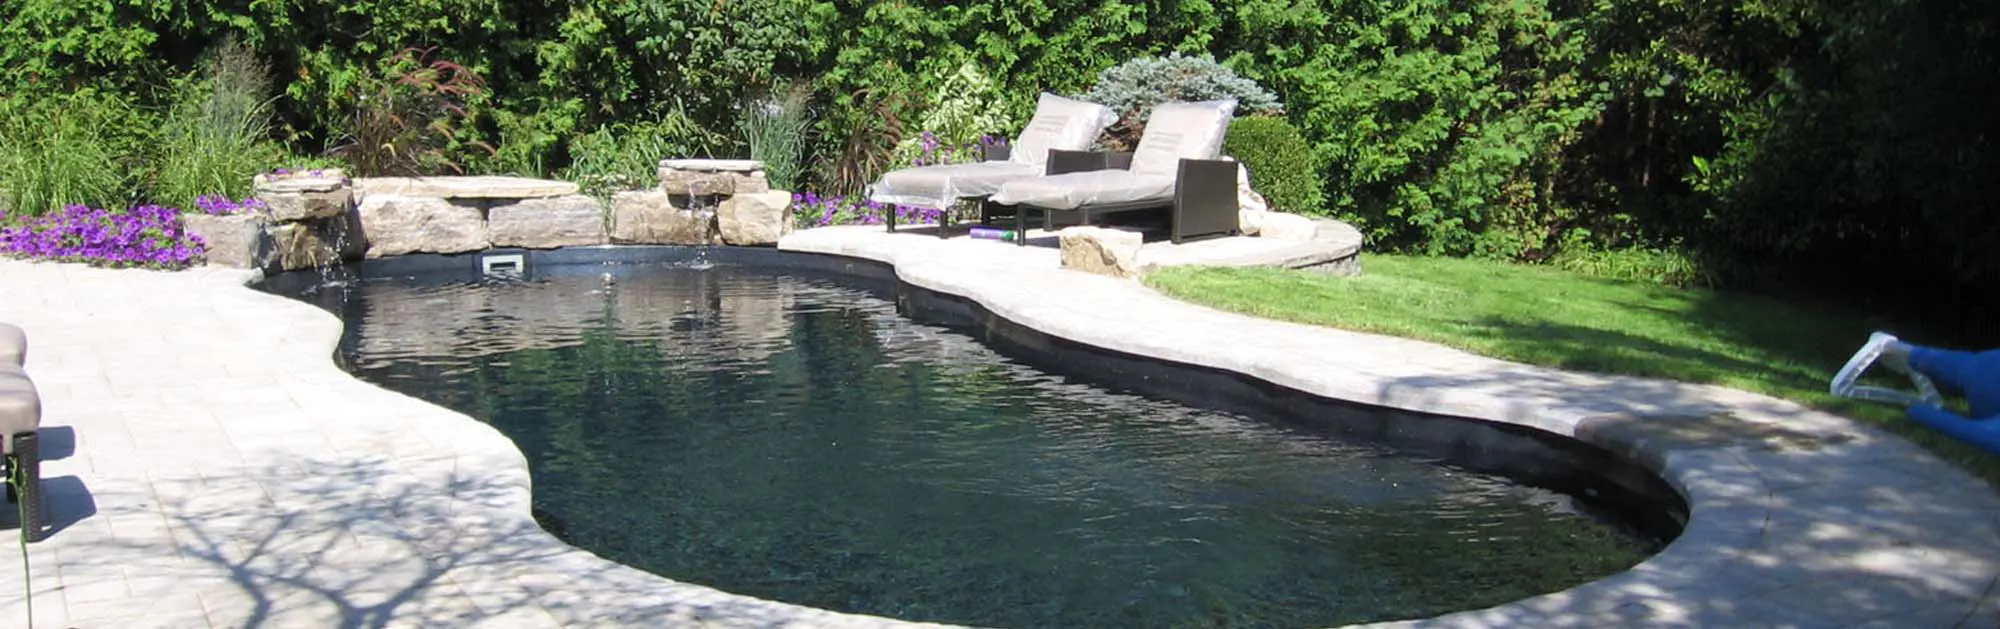 The Allure  Pool With Spa, Tanning Ledge, & Splash Pad - Leisure Pools